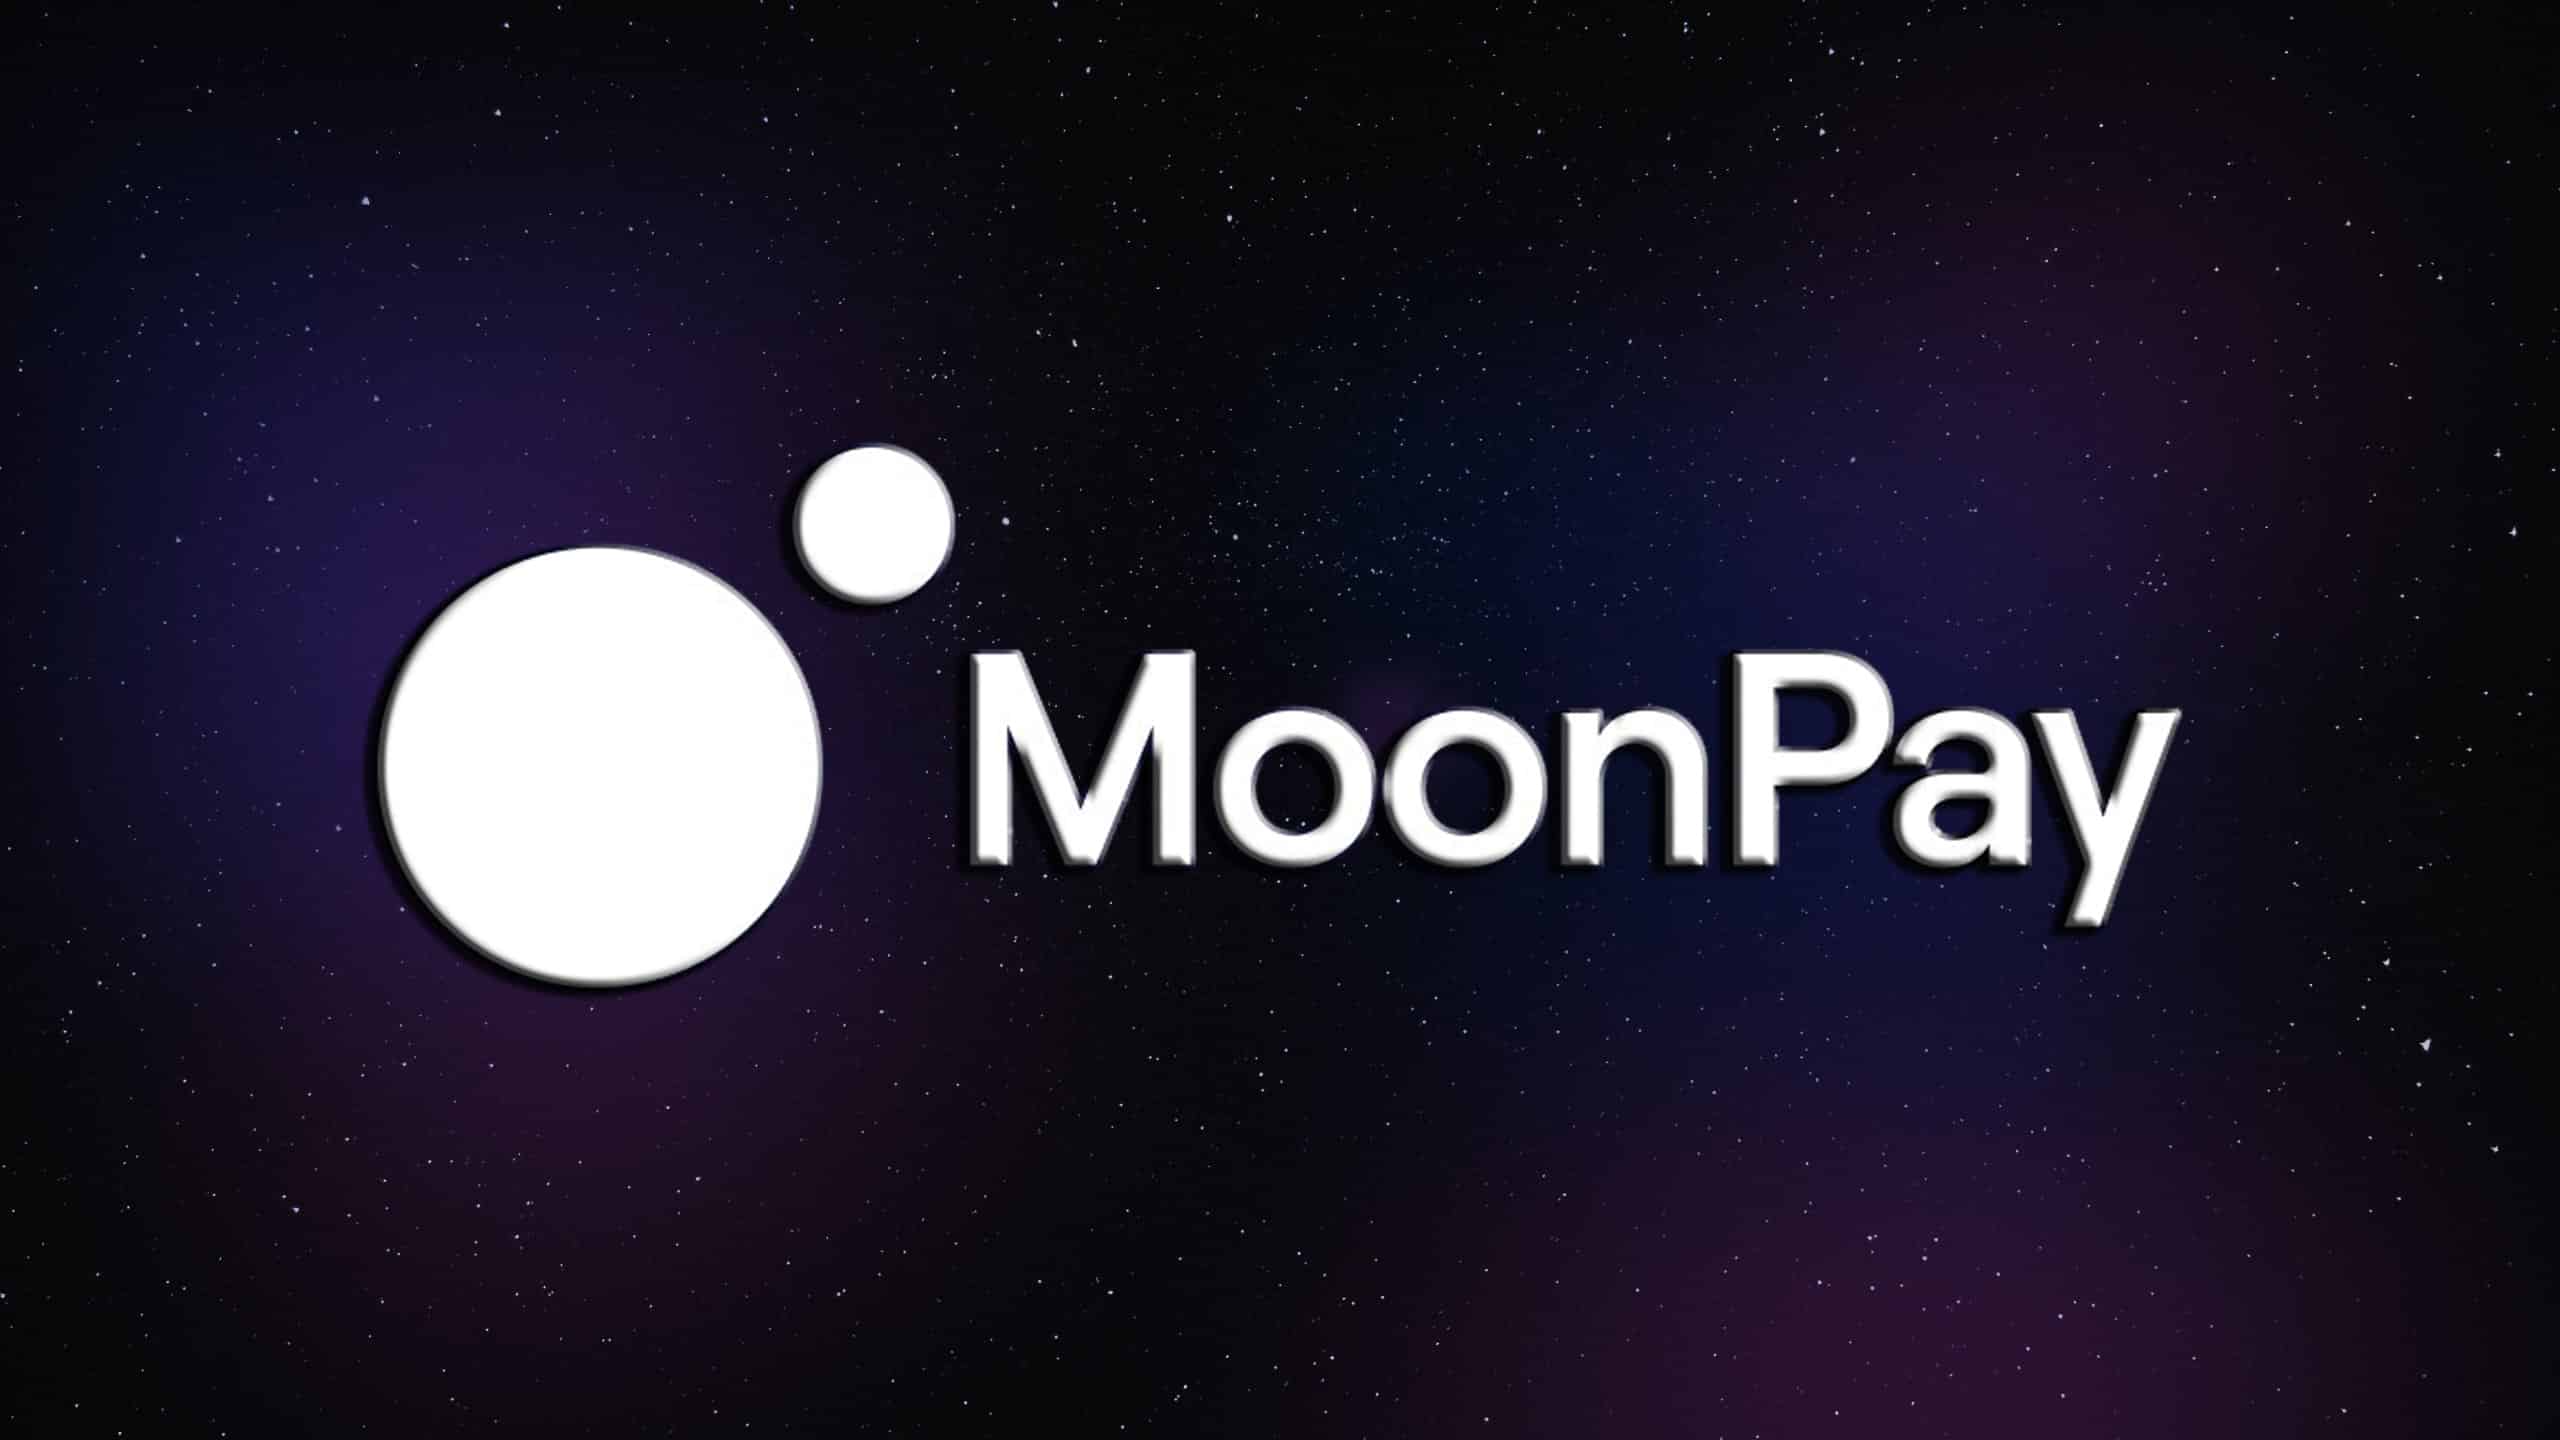 MoonPay купил NFT CryptoPunk за 900 ETH